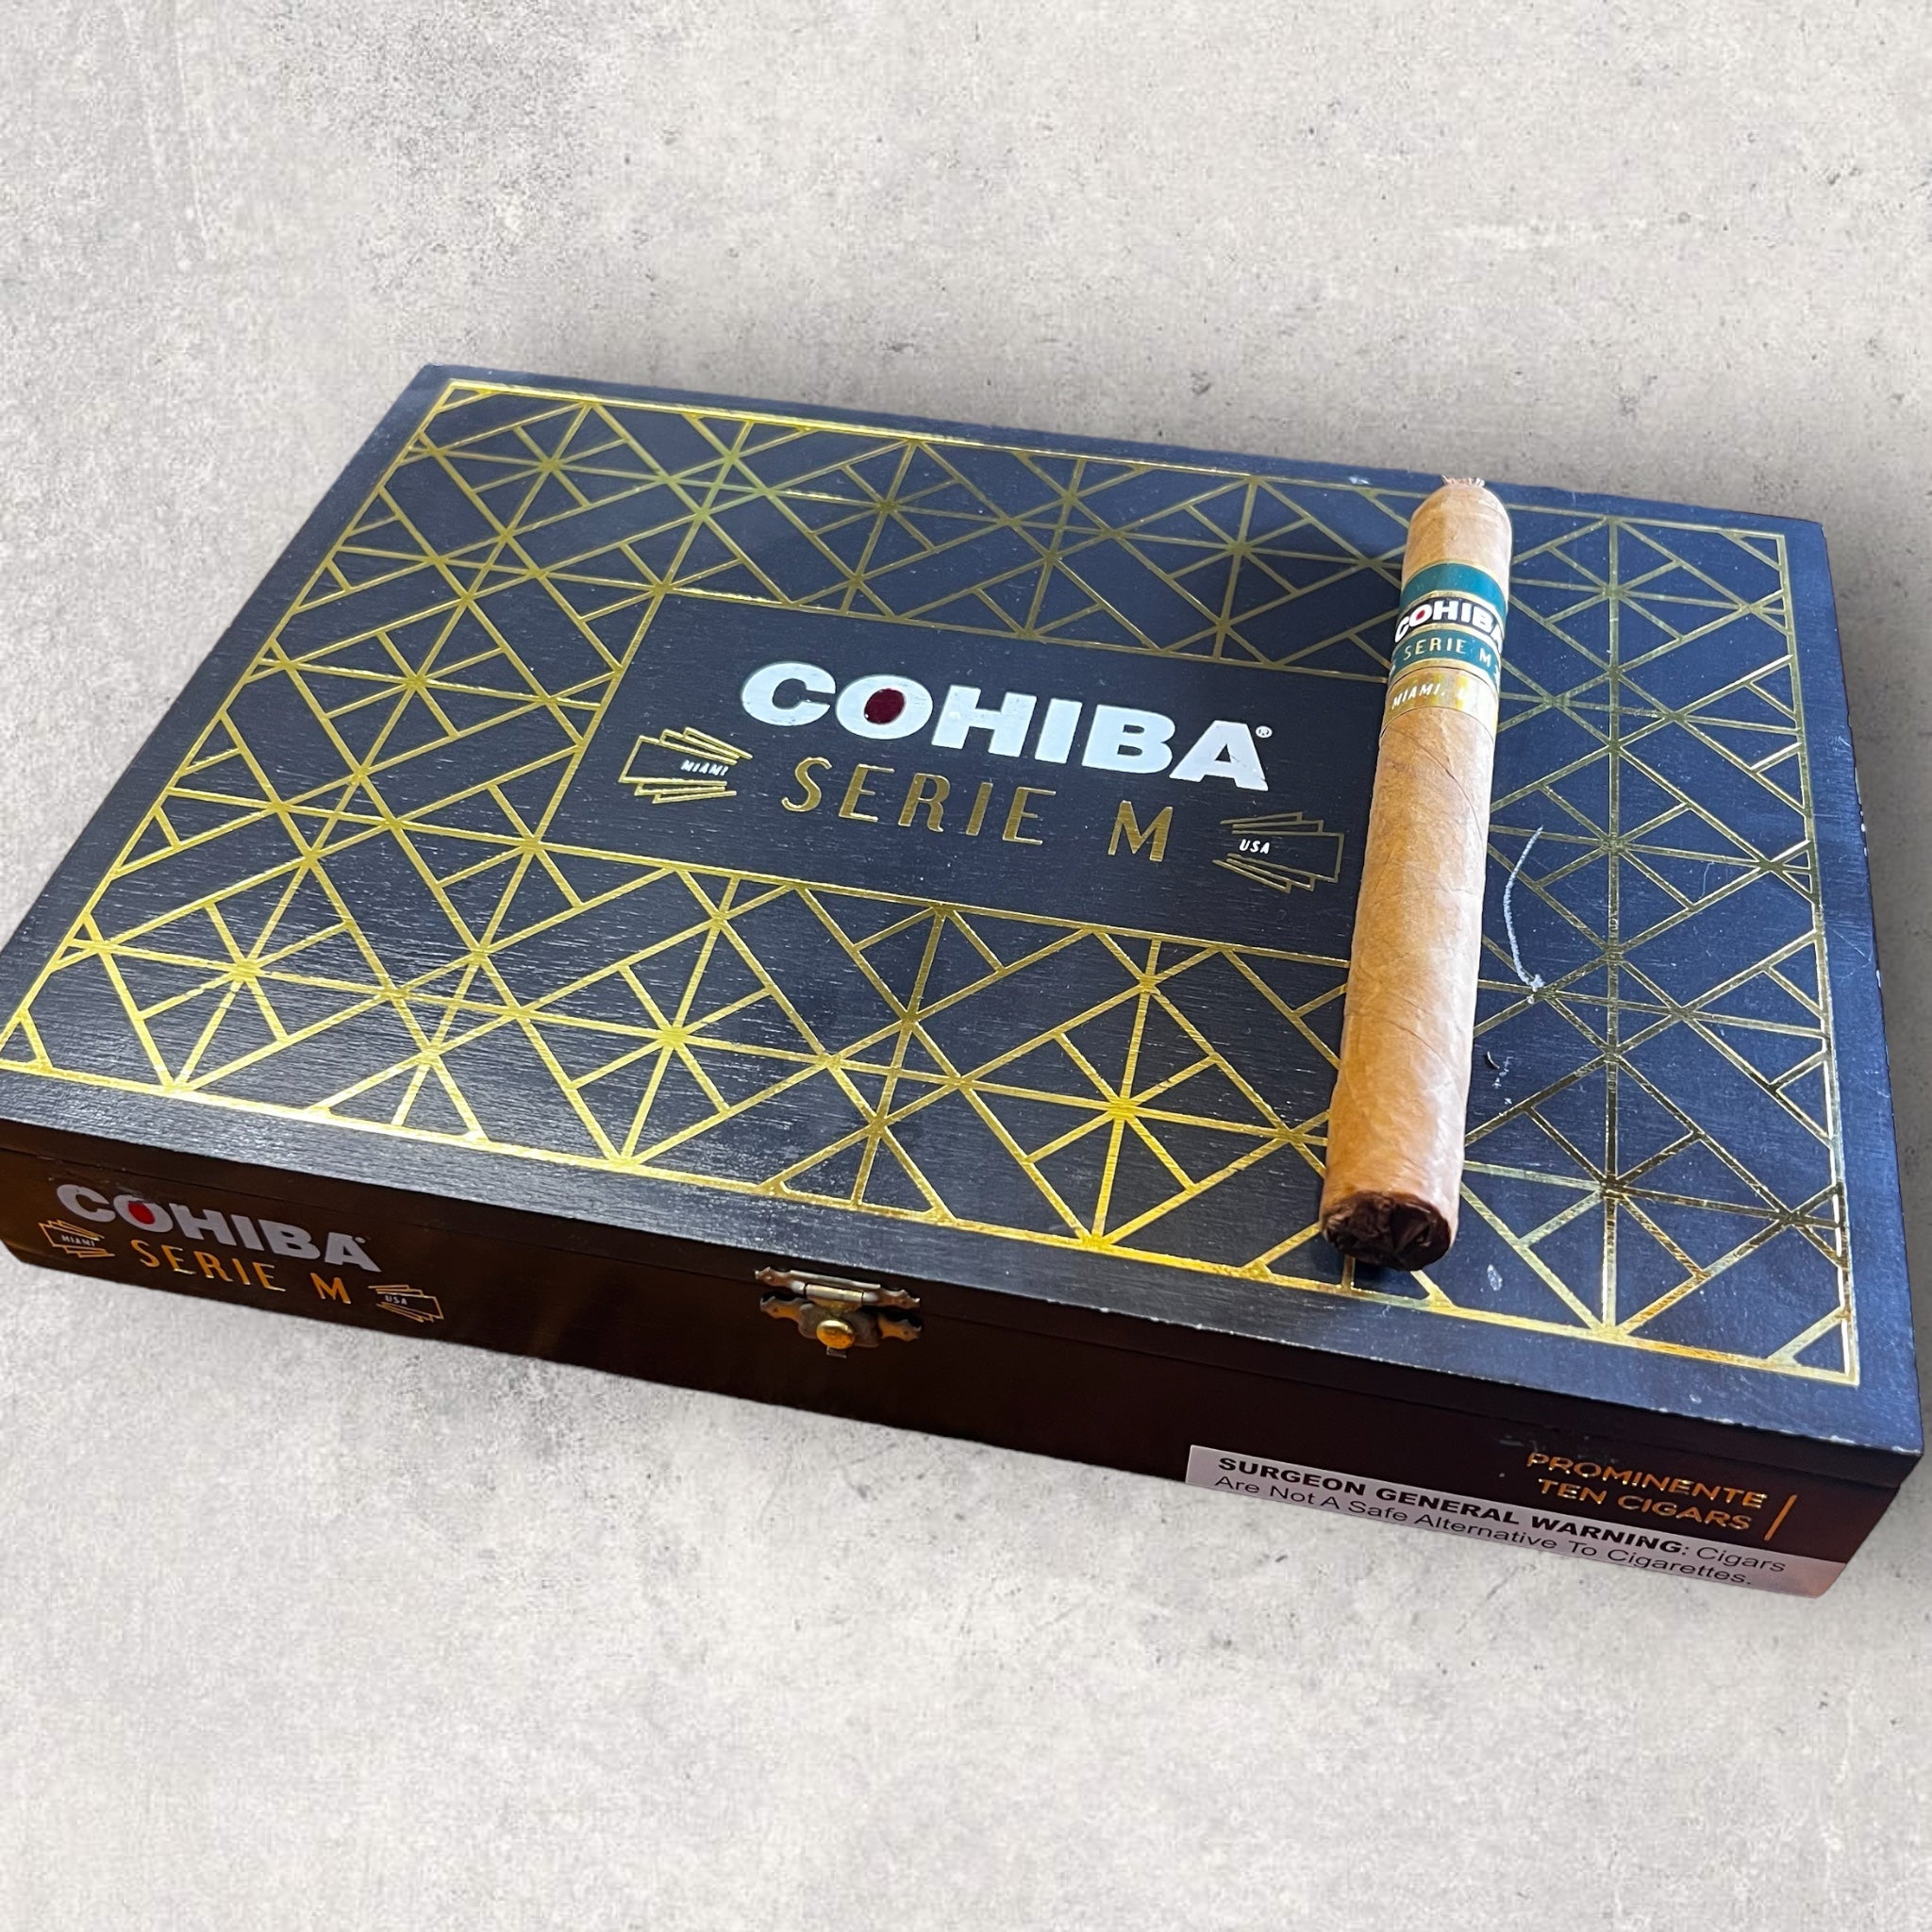 Cohiba Serie M Prominente - Cigar 30